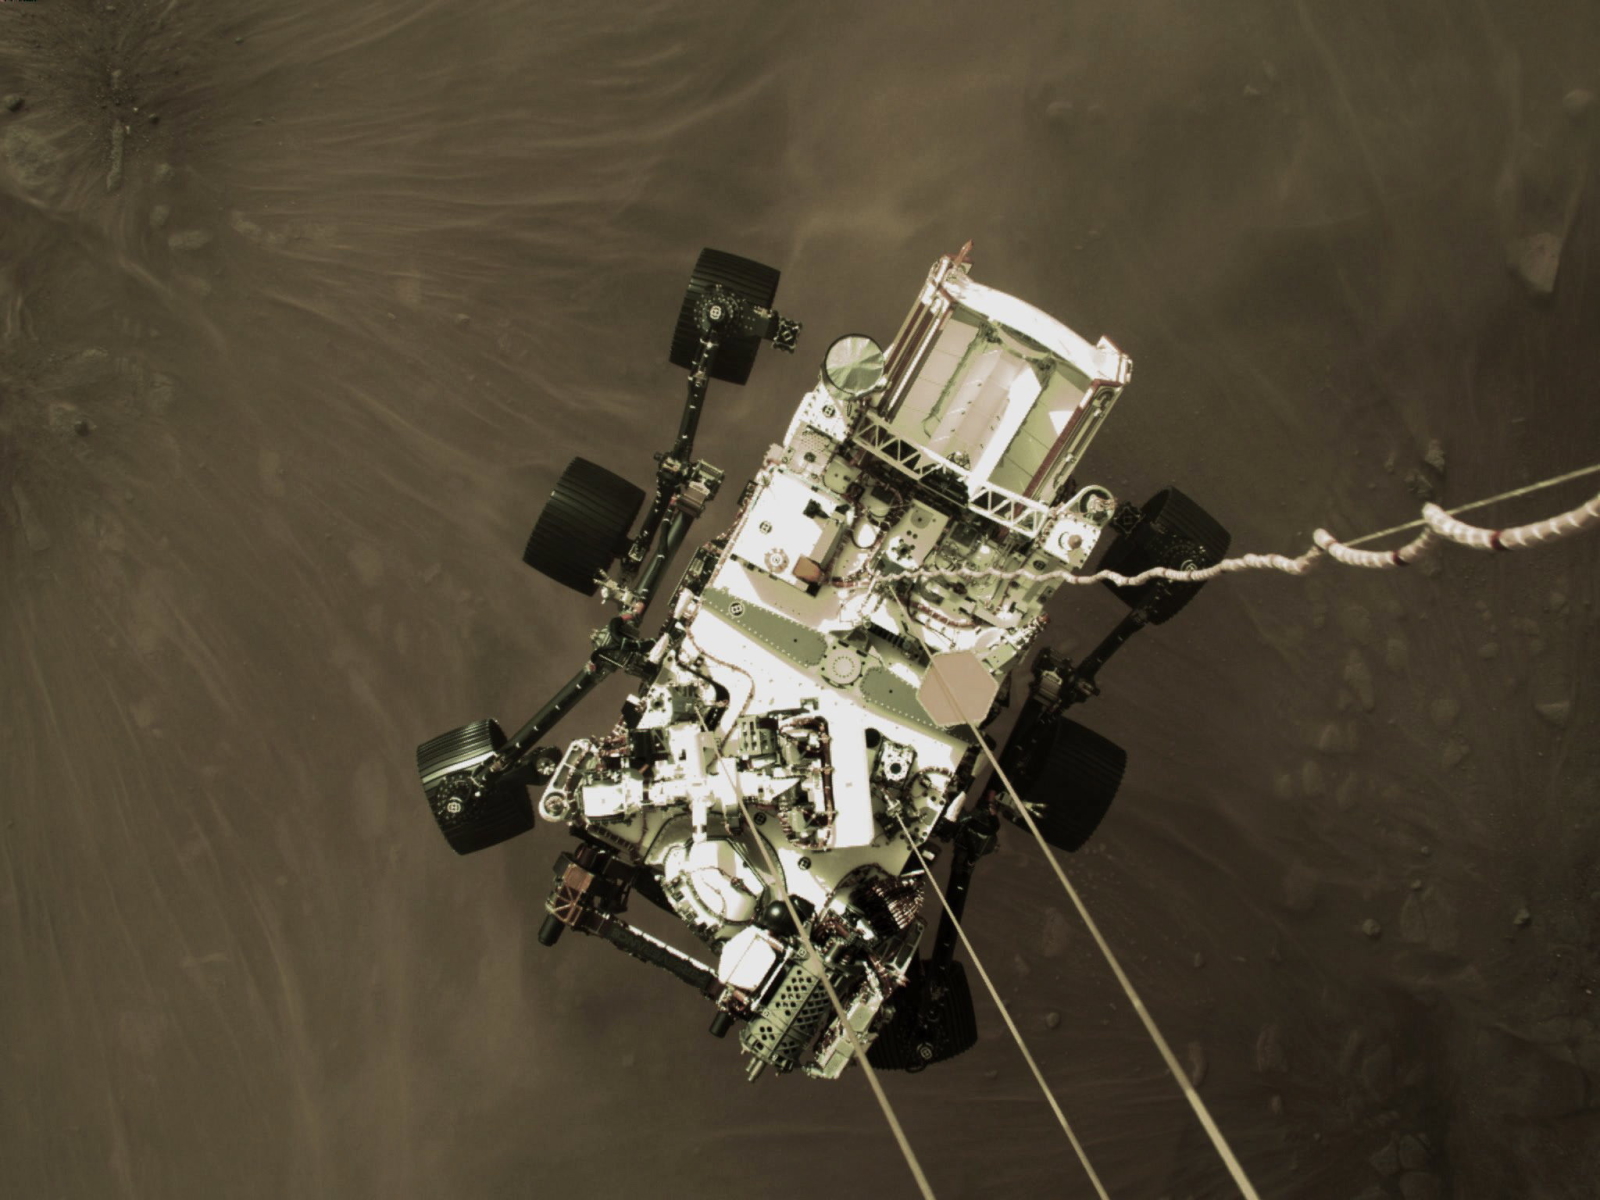 Łazik na Marsie fot. EPA/NASA/JPL-Caltech